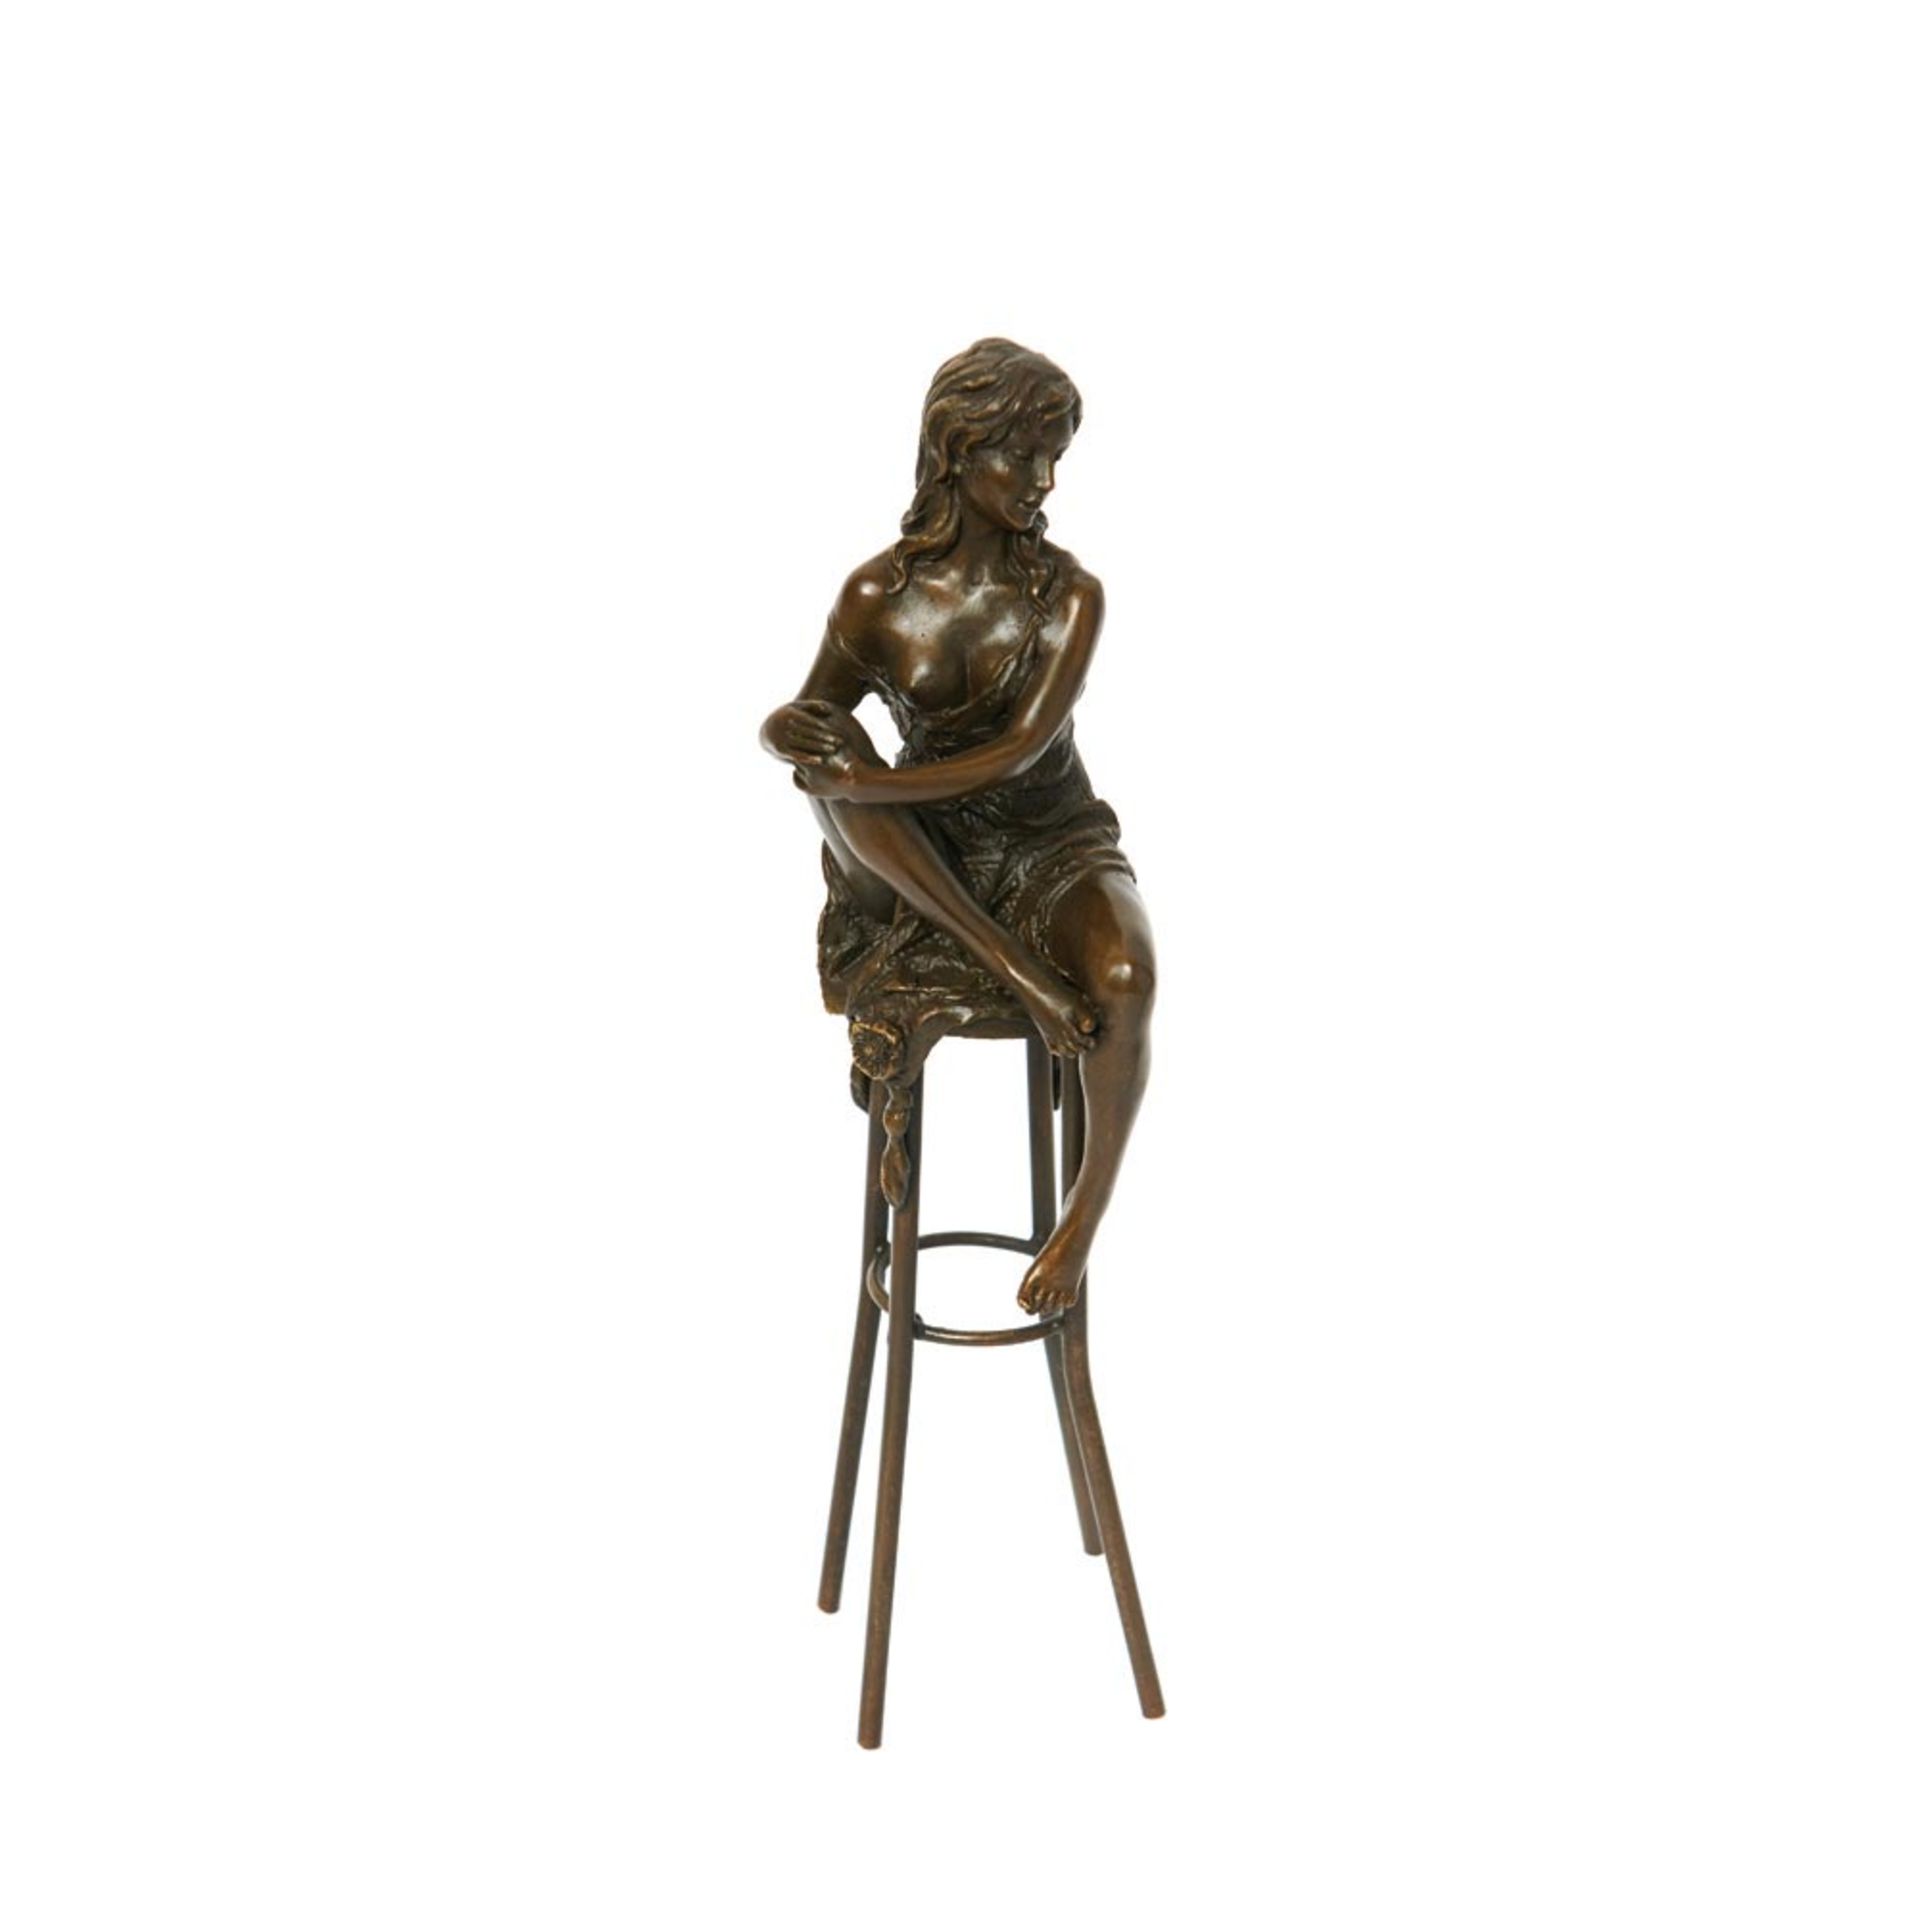 Escuela francesa, fles. del s.XX. Muchacha sobre taburete. Escultura en bronce patinado. Firmada